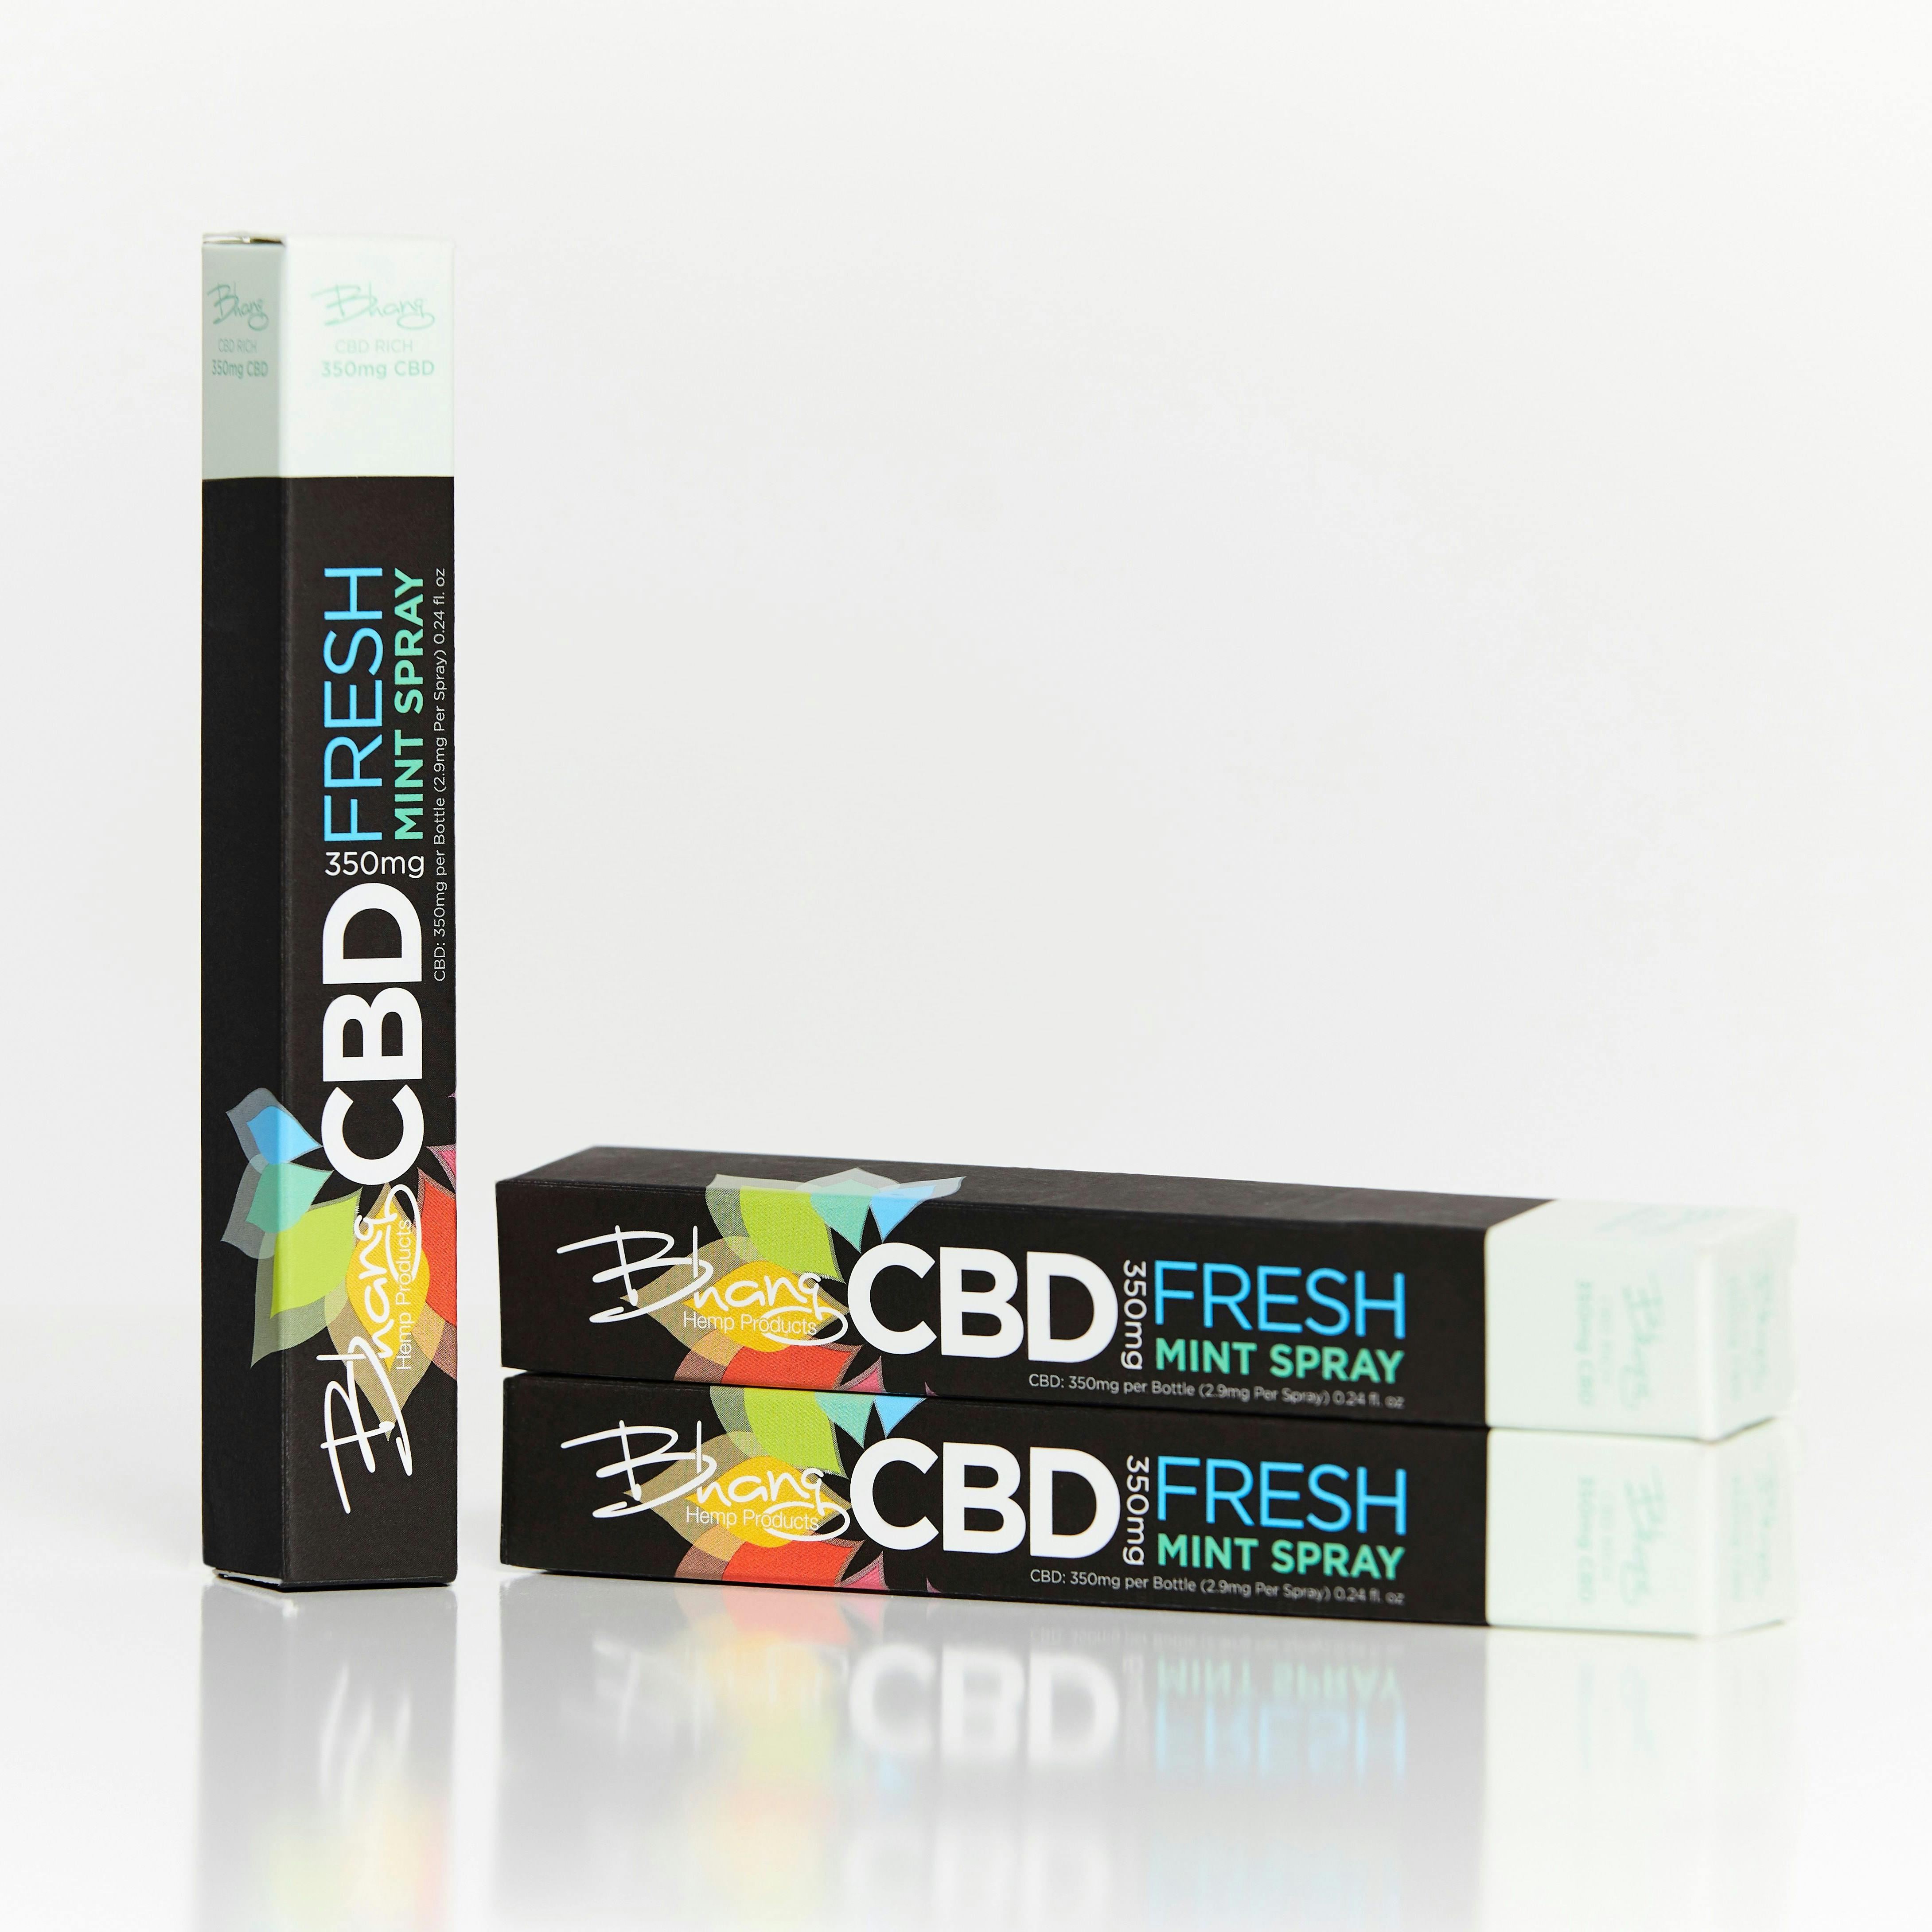 Cbd fresh mint spray